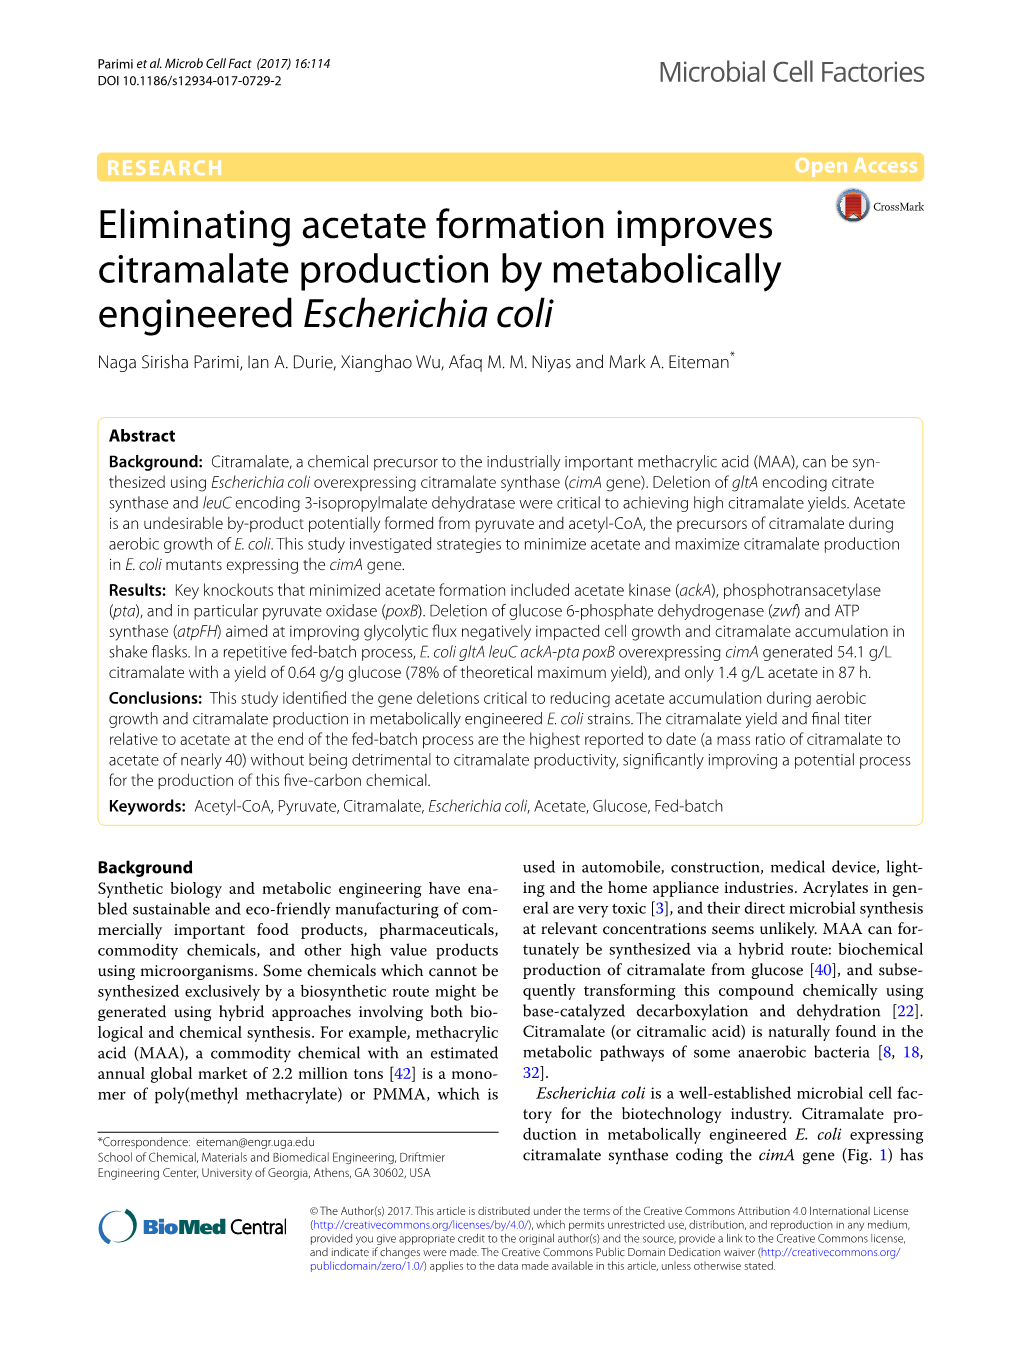 Eliminating Acetate Formation Improves Citramalate Production by Metabolically Engineered Escherichia Coli Naga Sirisha Parimi, Ian A